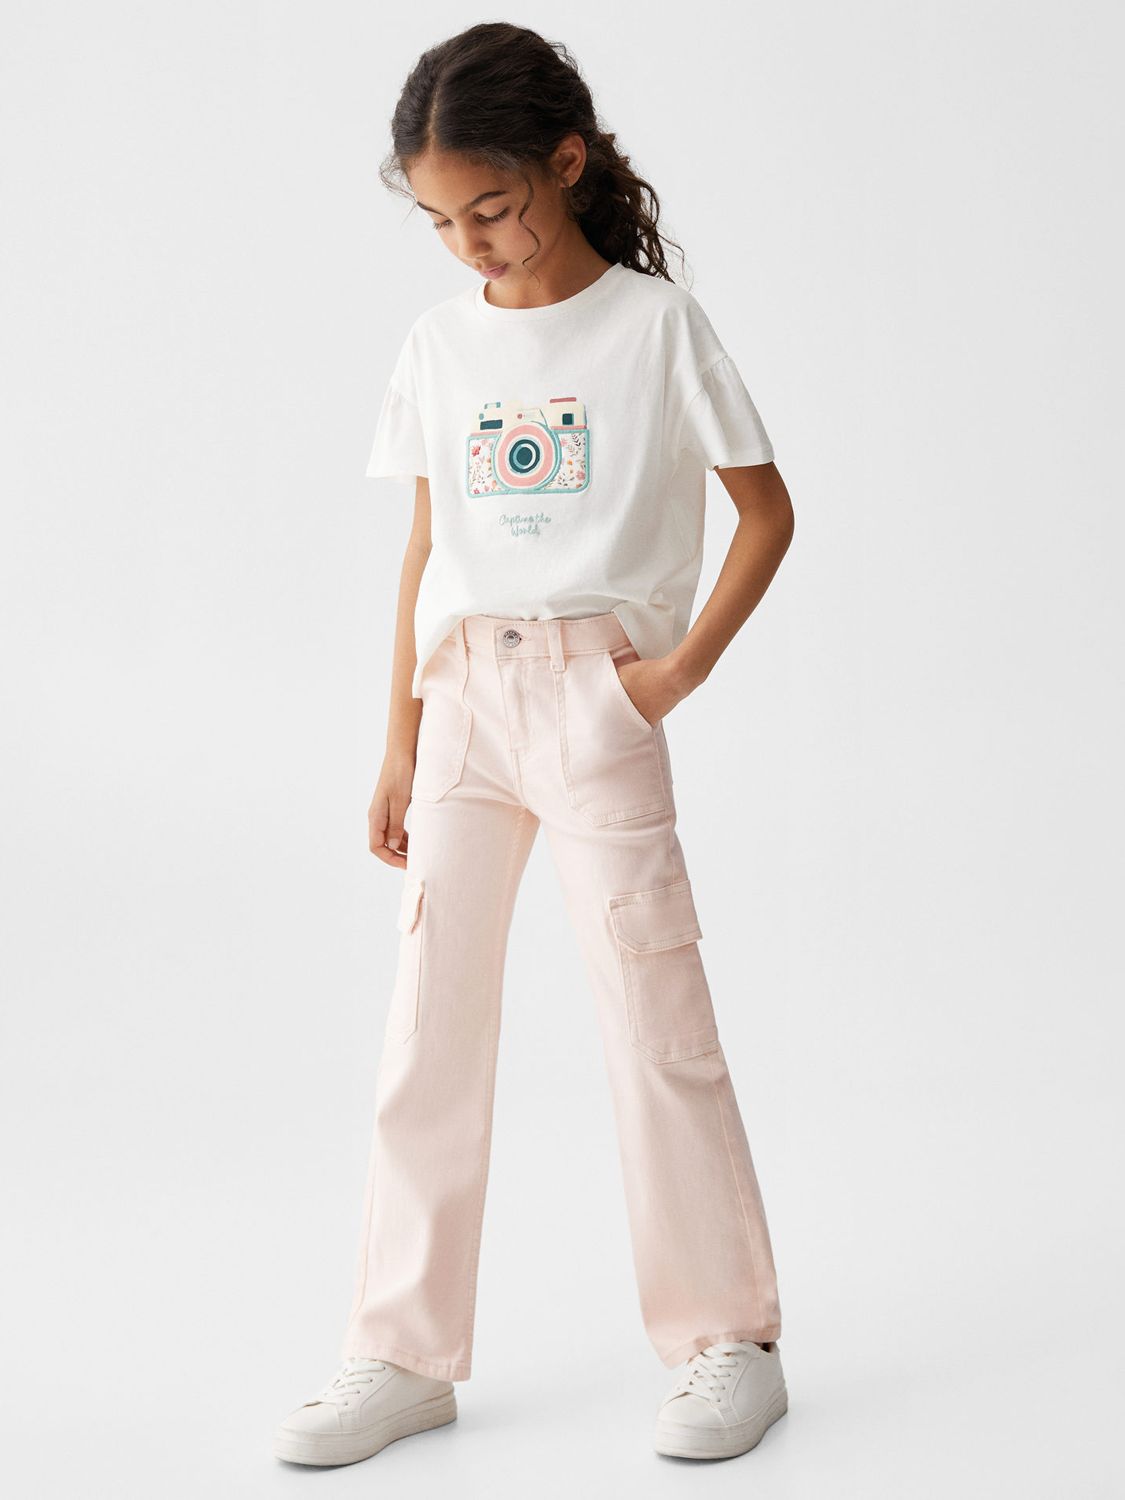 Mango Kids' Capture Embroidered T-Shirt, Natural White, 11-12 years